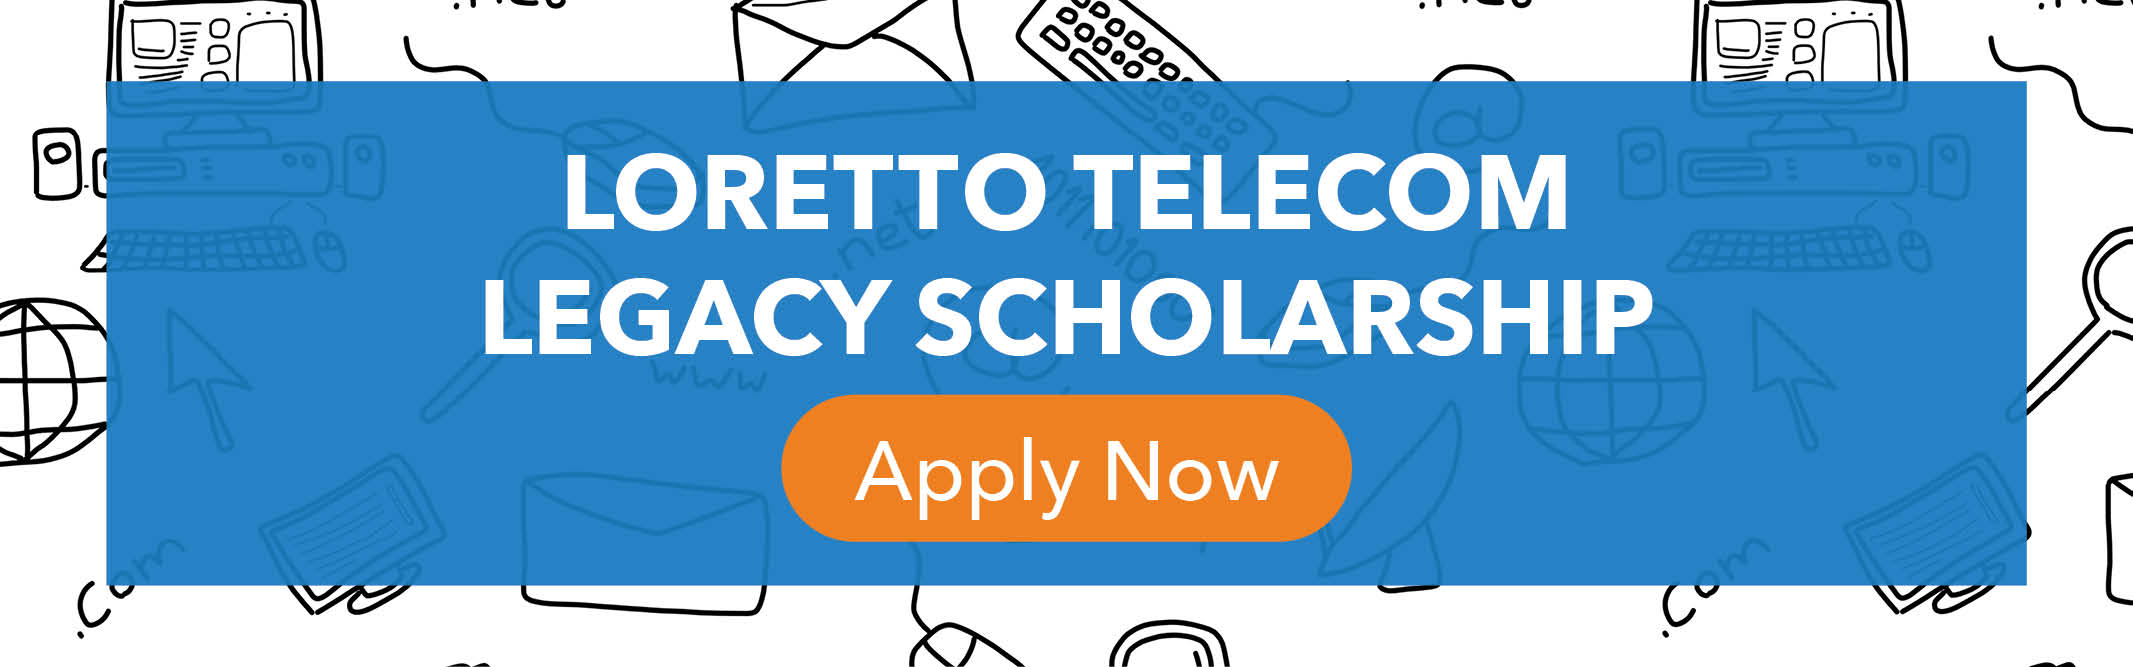 Loretto Telecom Legacy Scholarship - Apply now!